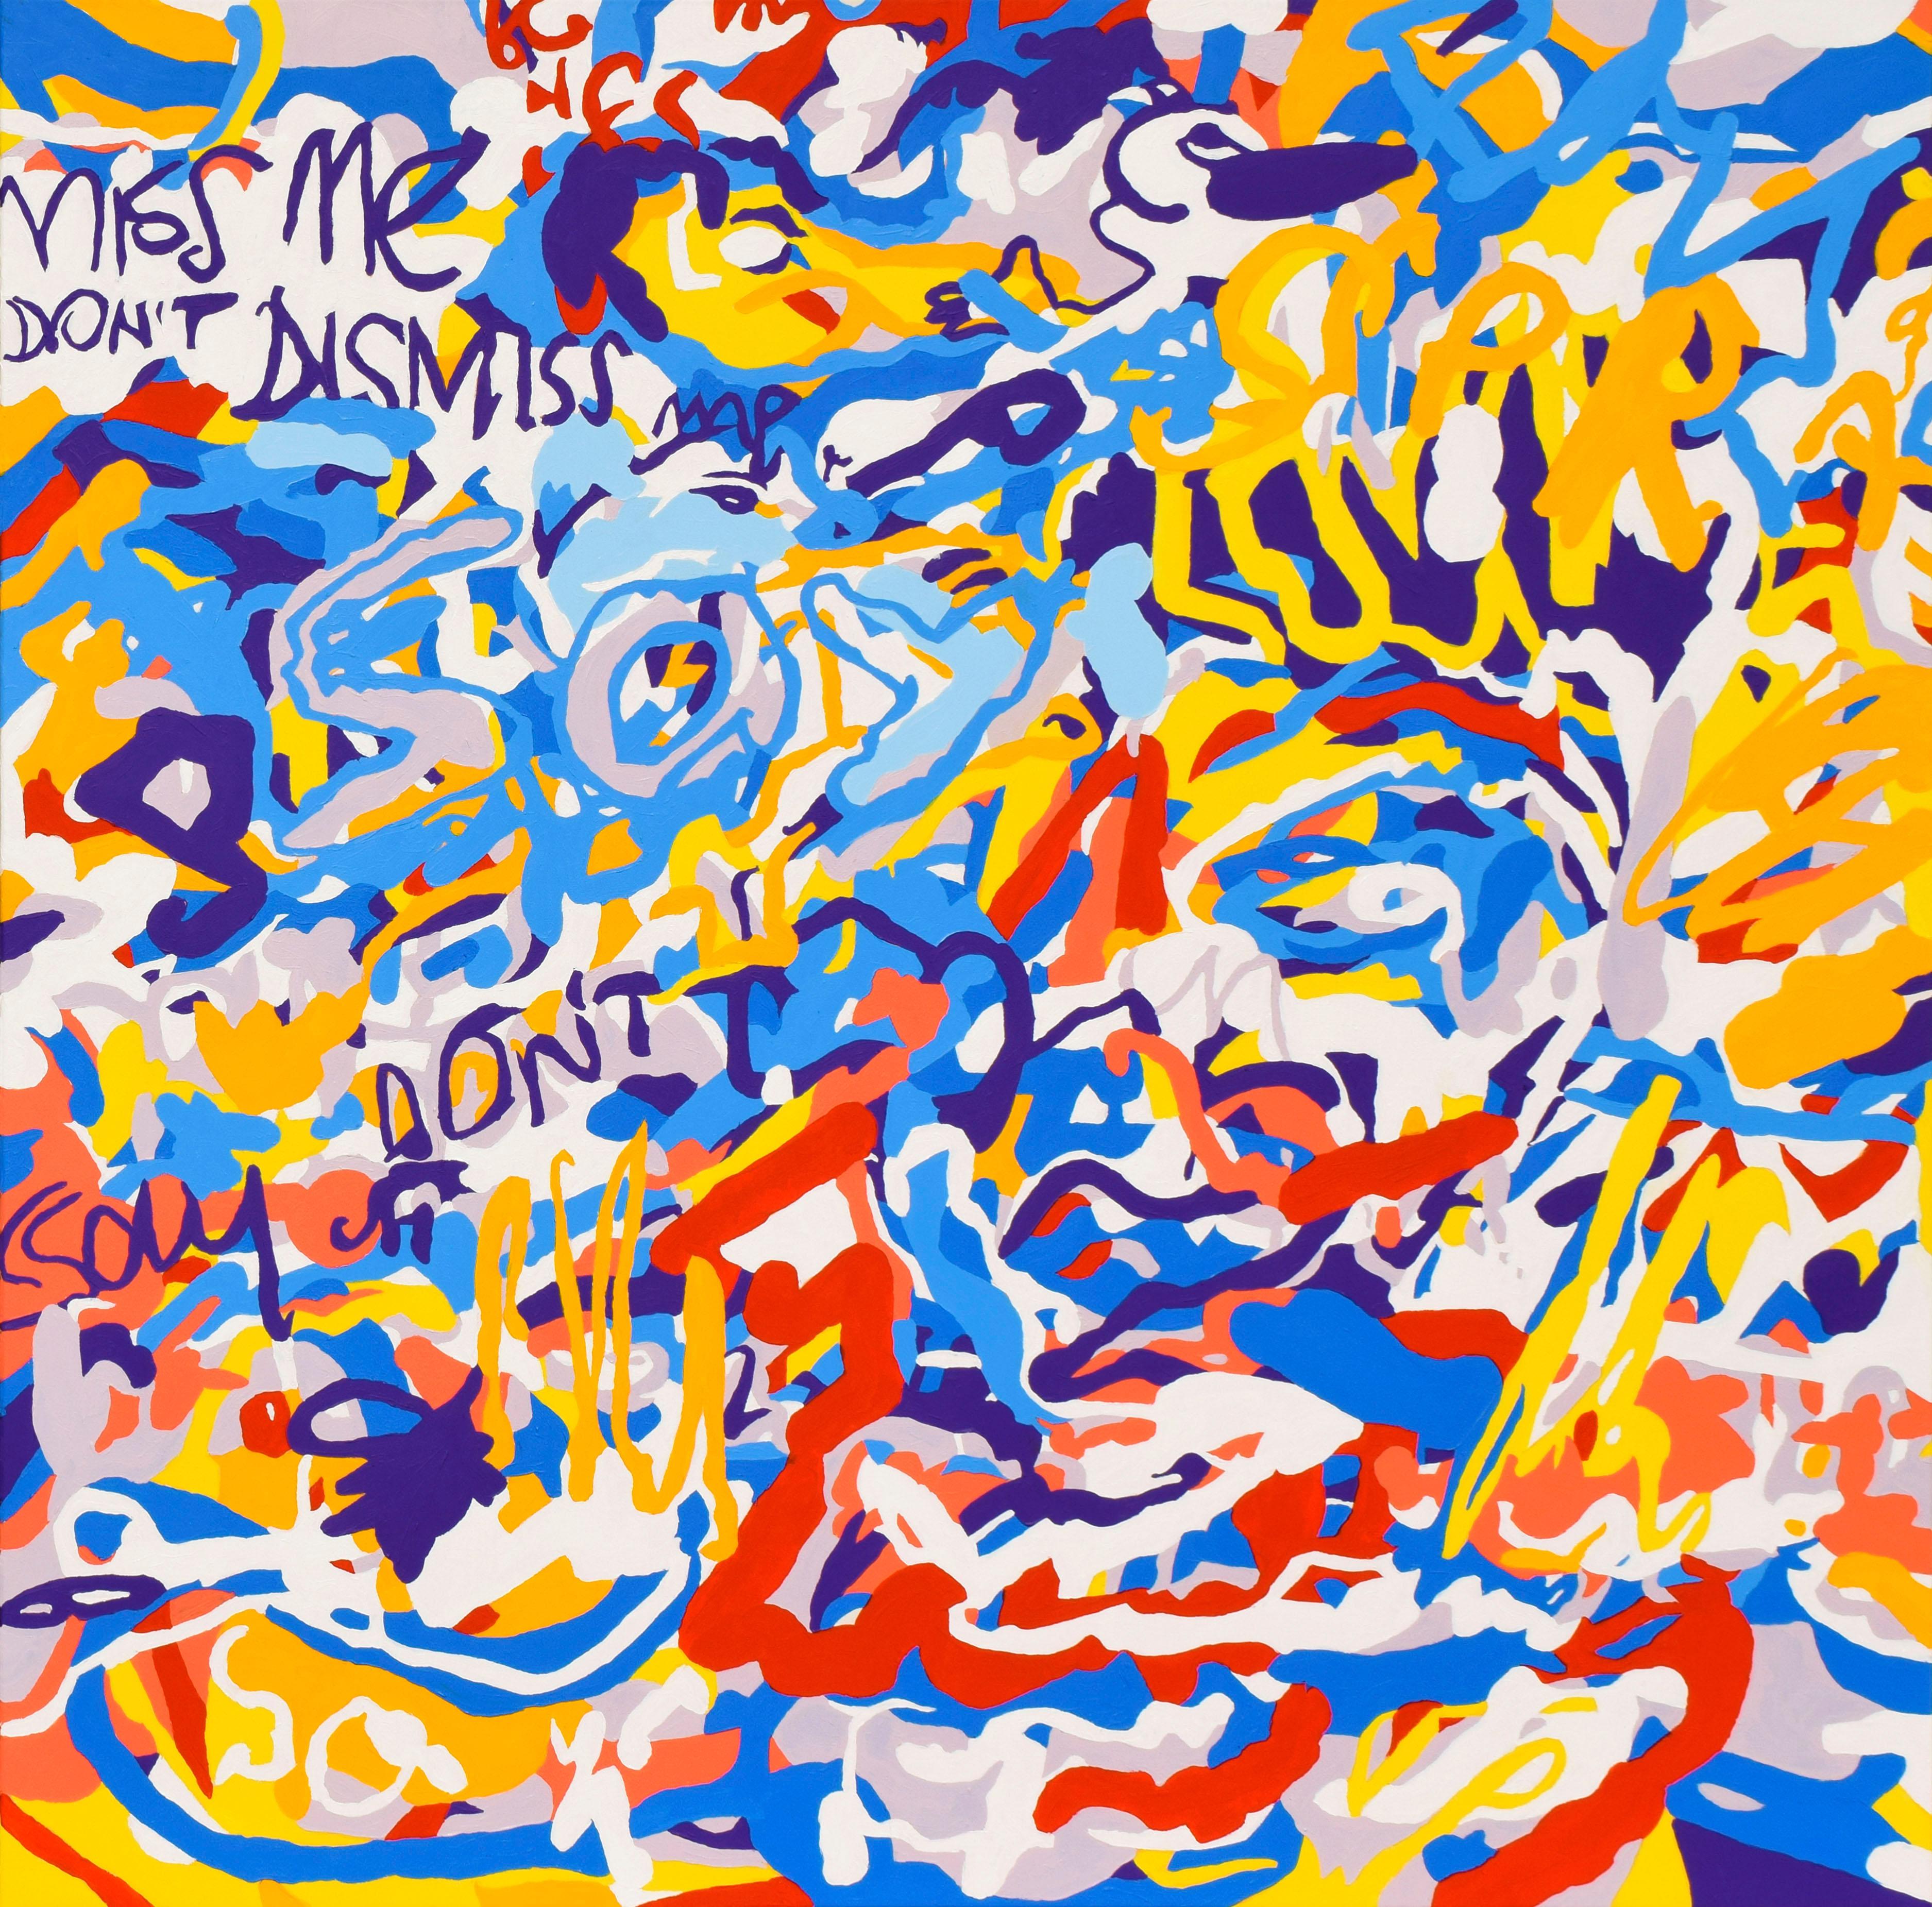 Paweł Myszka Figurative Painting - "Miss Me - Dont Dismiss Me" - Abstraction, Expression, Pop, Street Art, Joyful